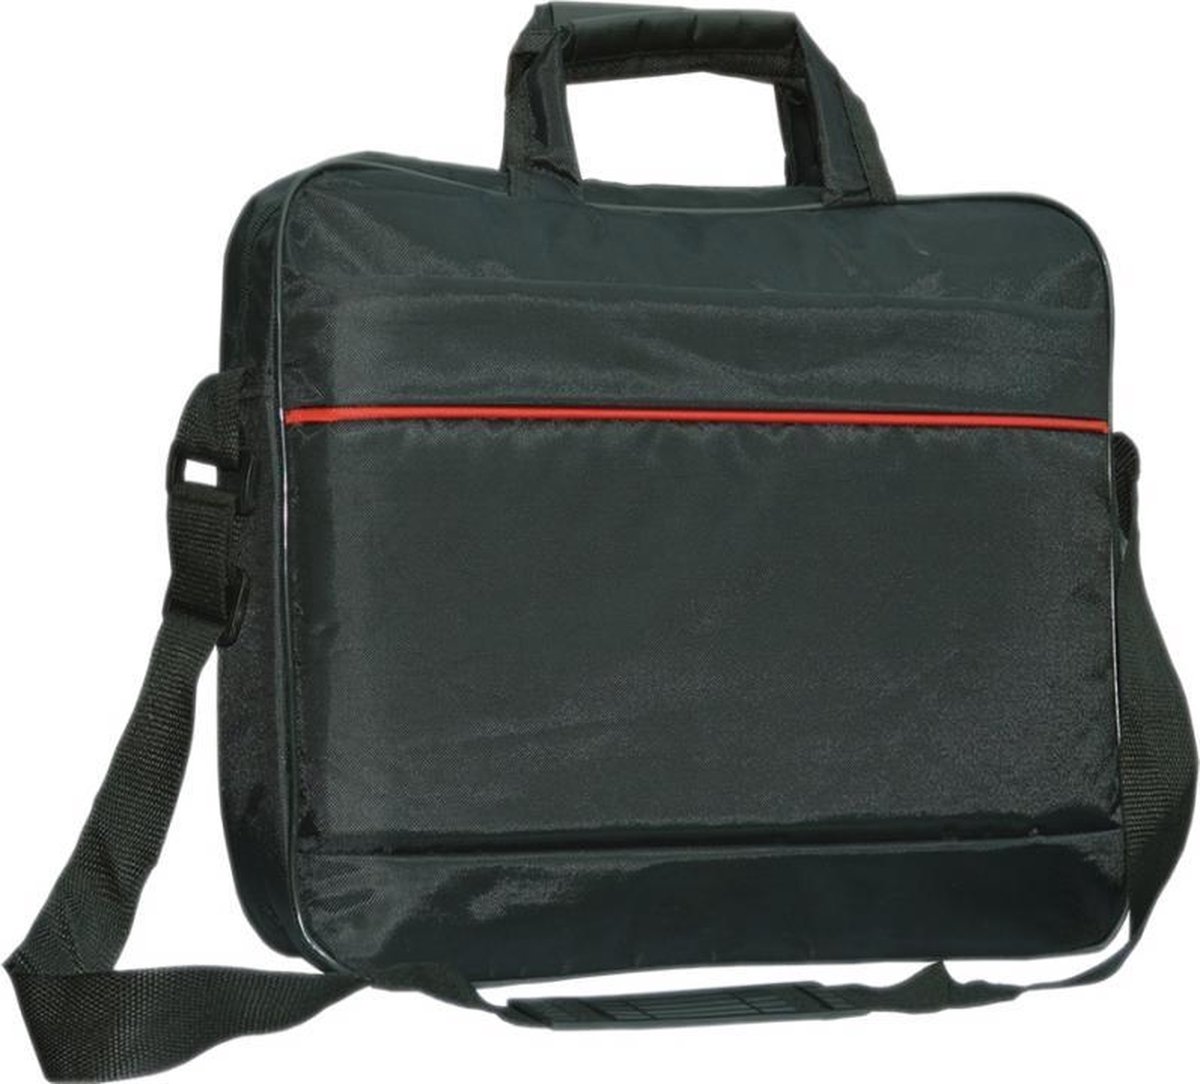 Asus Chromebook C200ma laptoptas messenger bag / schoudertas / tas , zwart , merk i12Cover